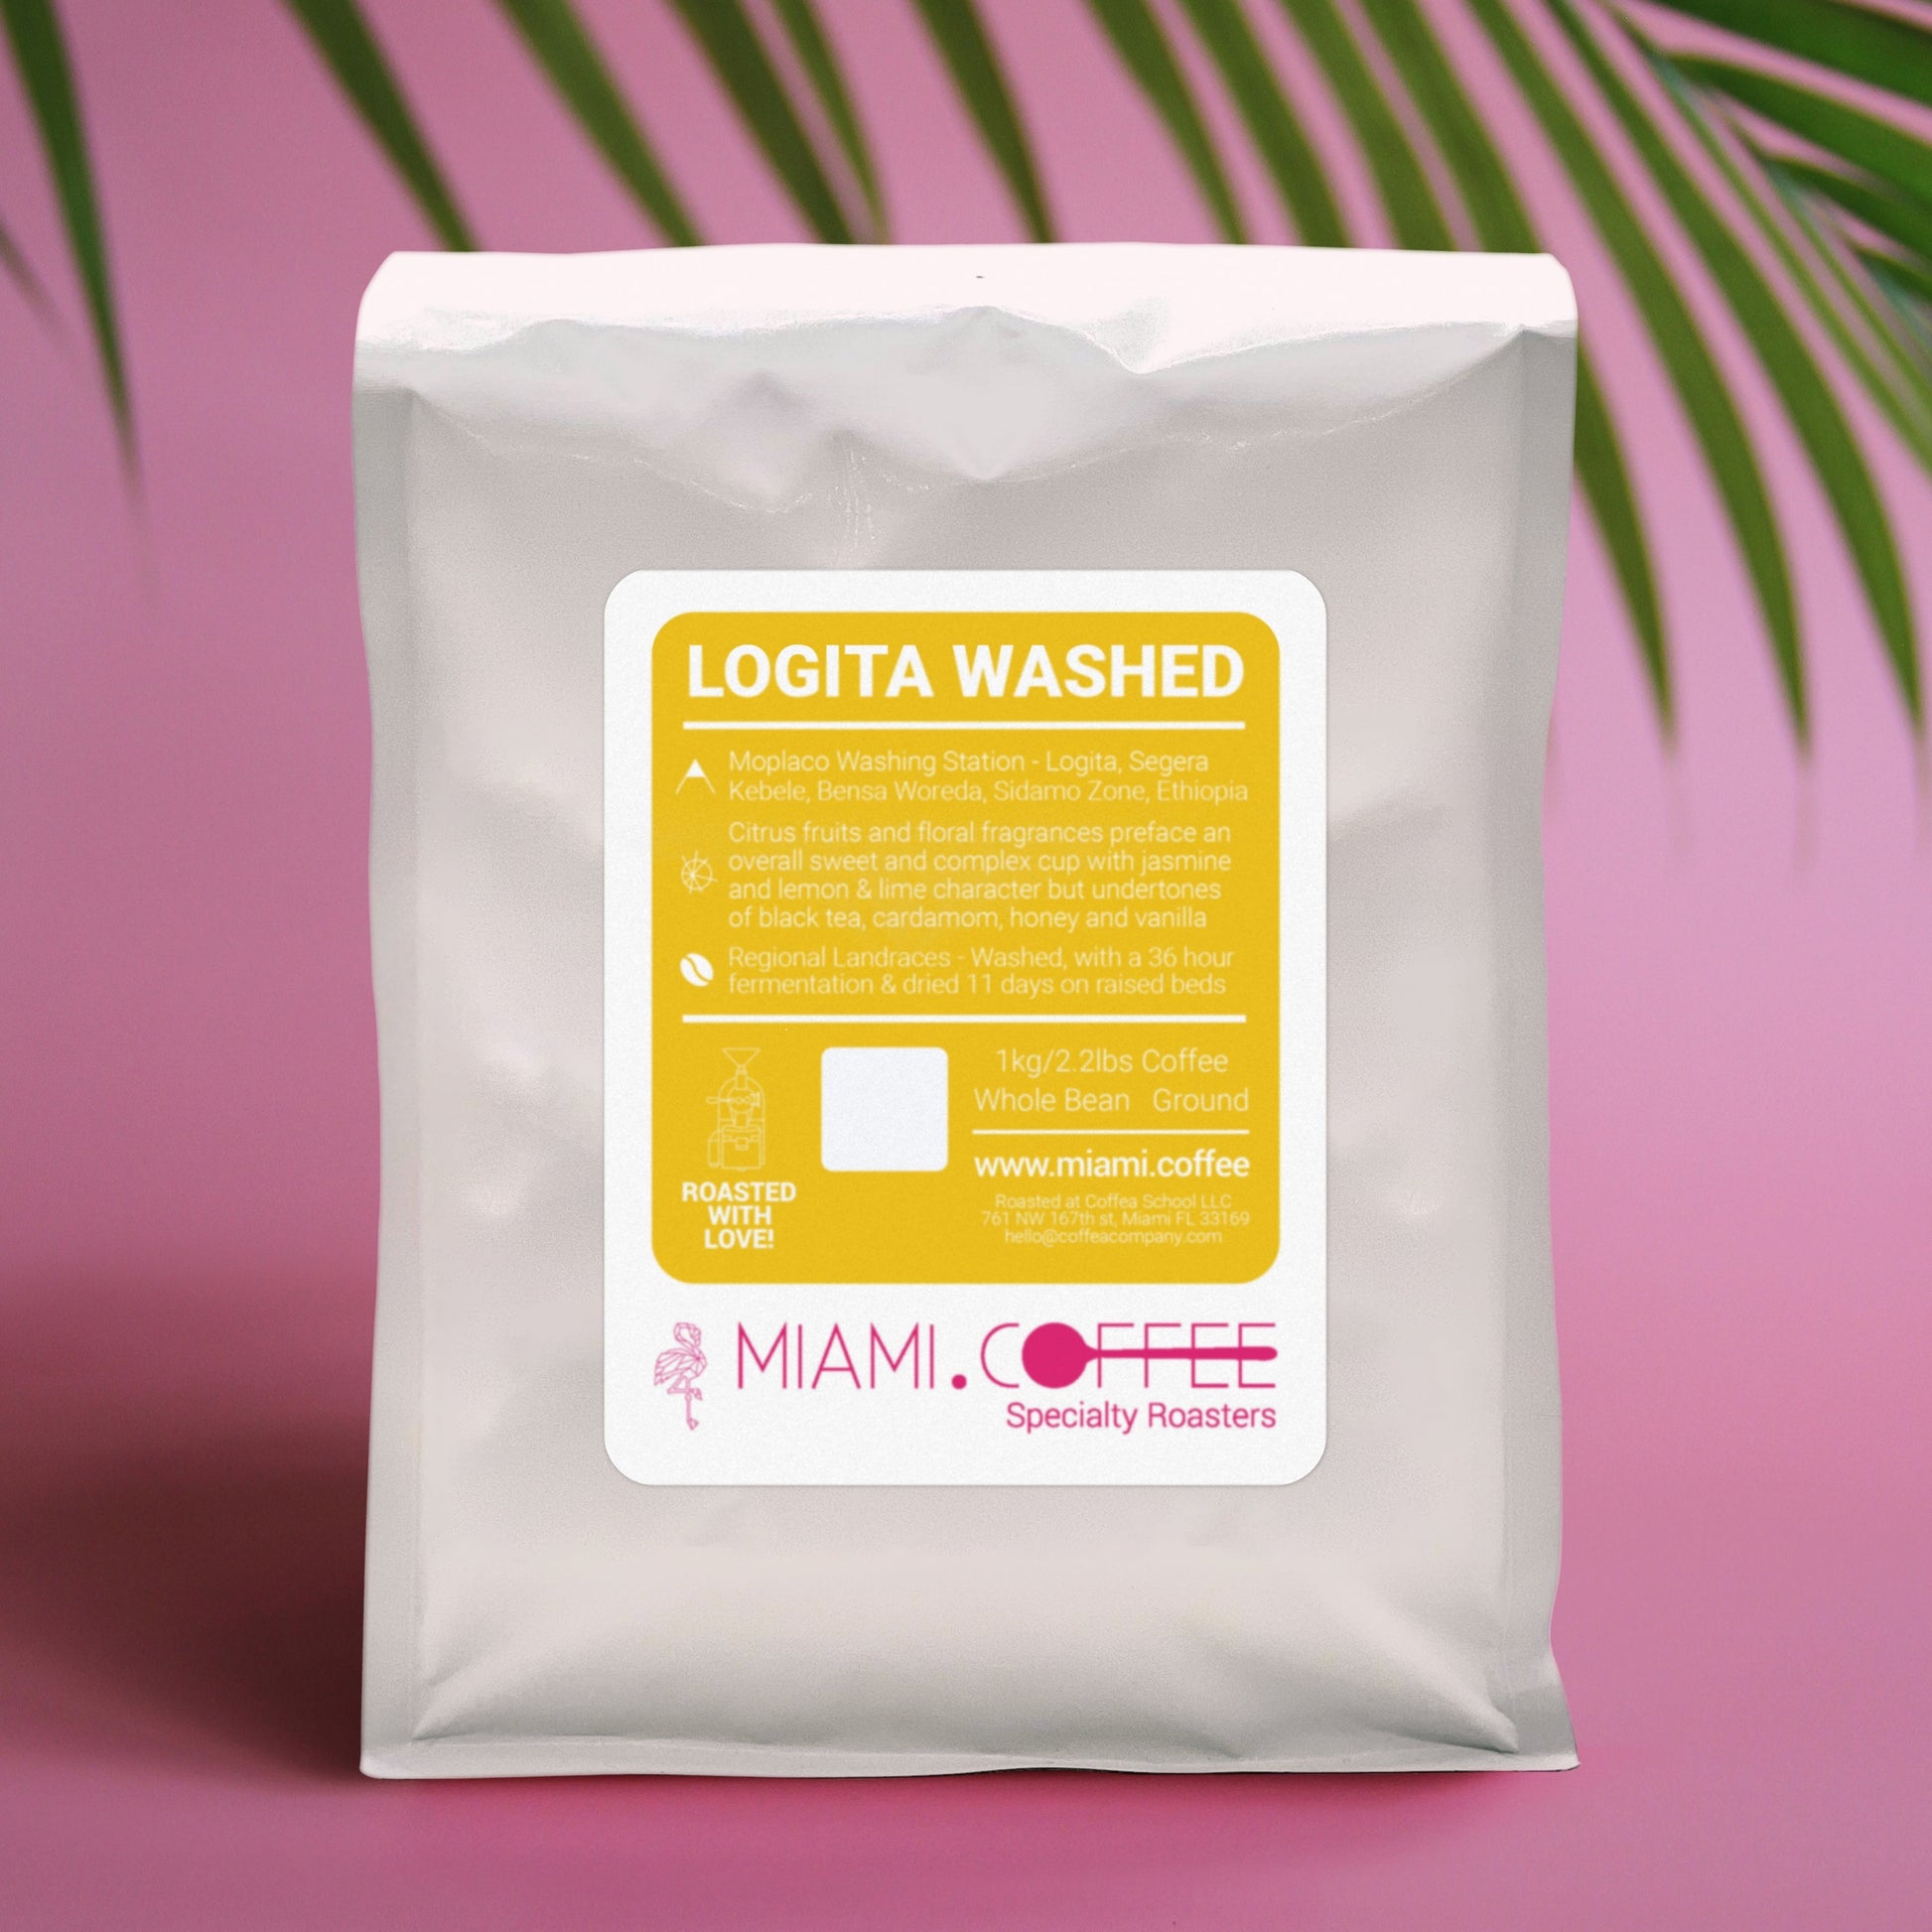 1kg bag of Ethiopia Logita Washed roasted by Miami(dot)Coffee, from Segera Bensa Sidama, Ethiopia, Regional Landraces, Washed Processed. Flavor descriptors: Citrus, Jasmine, Vanilla